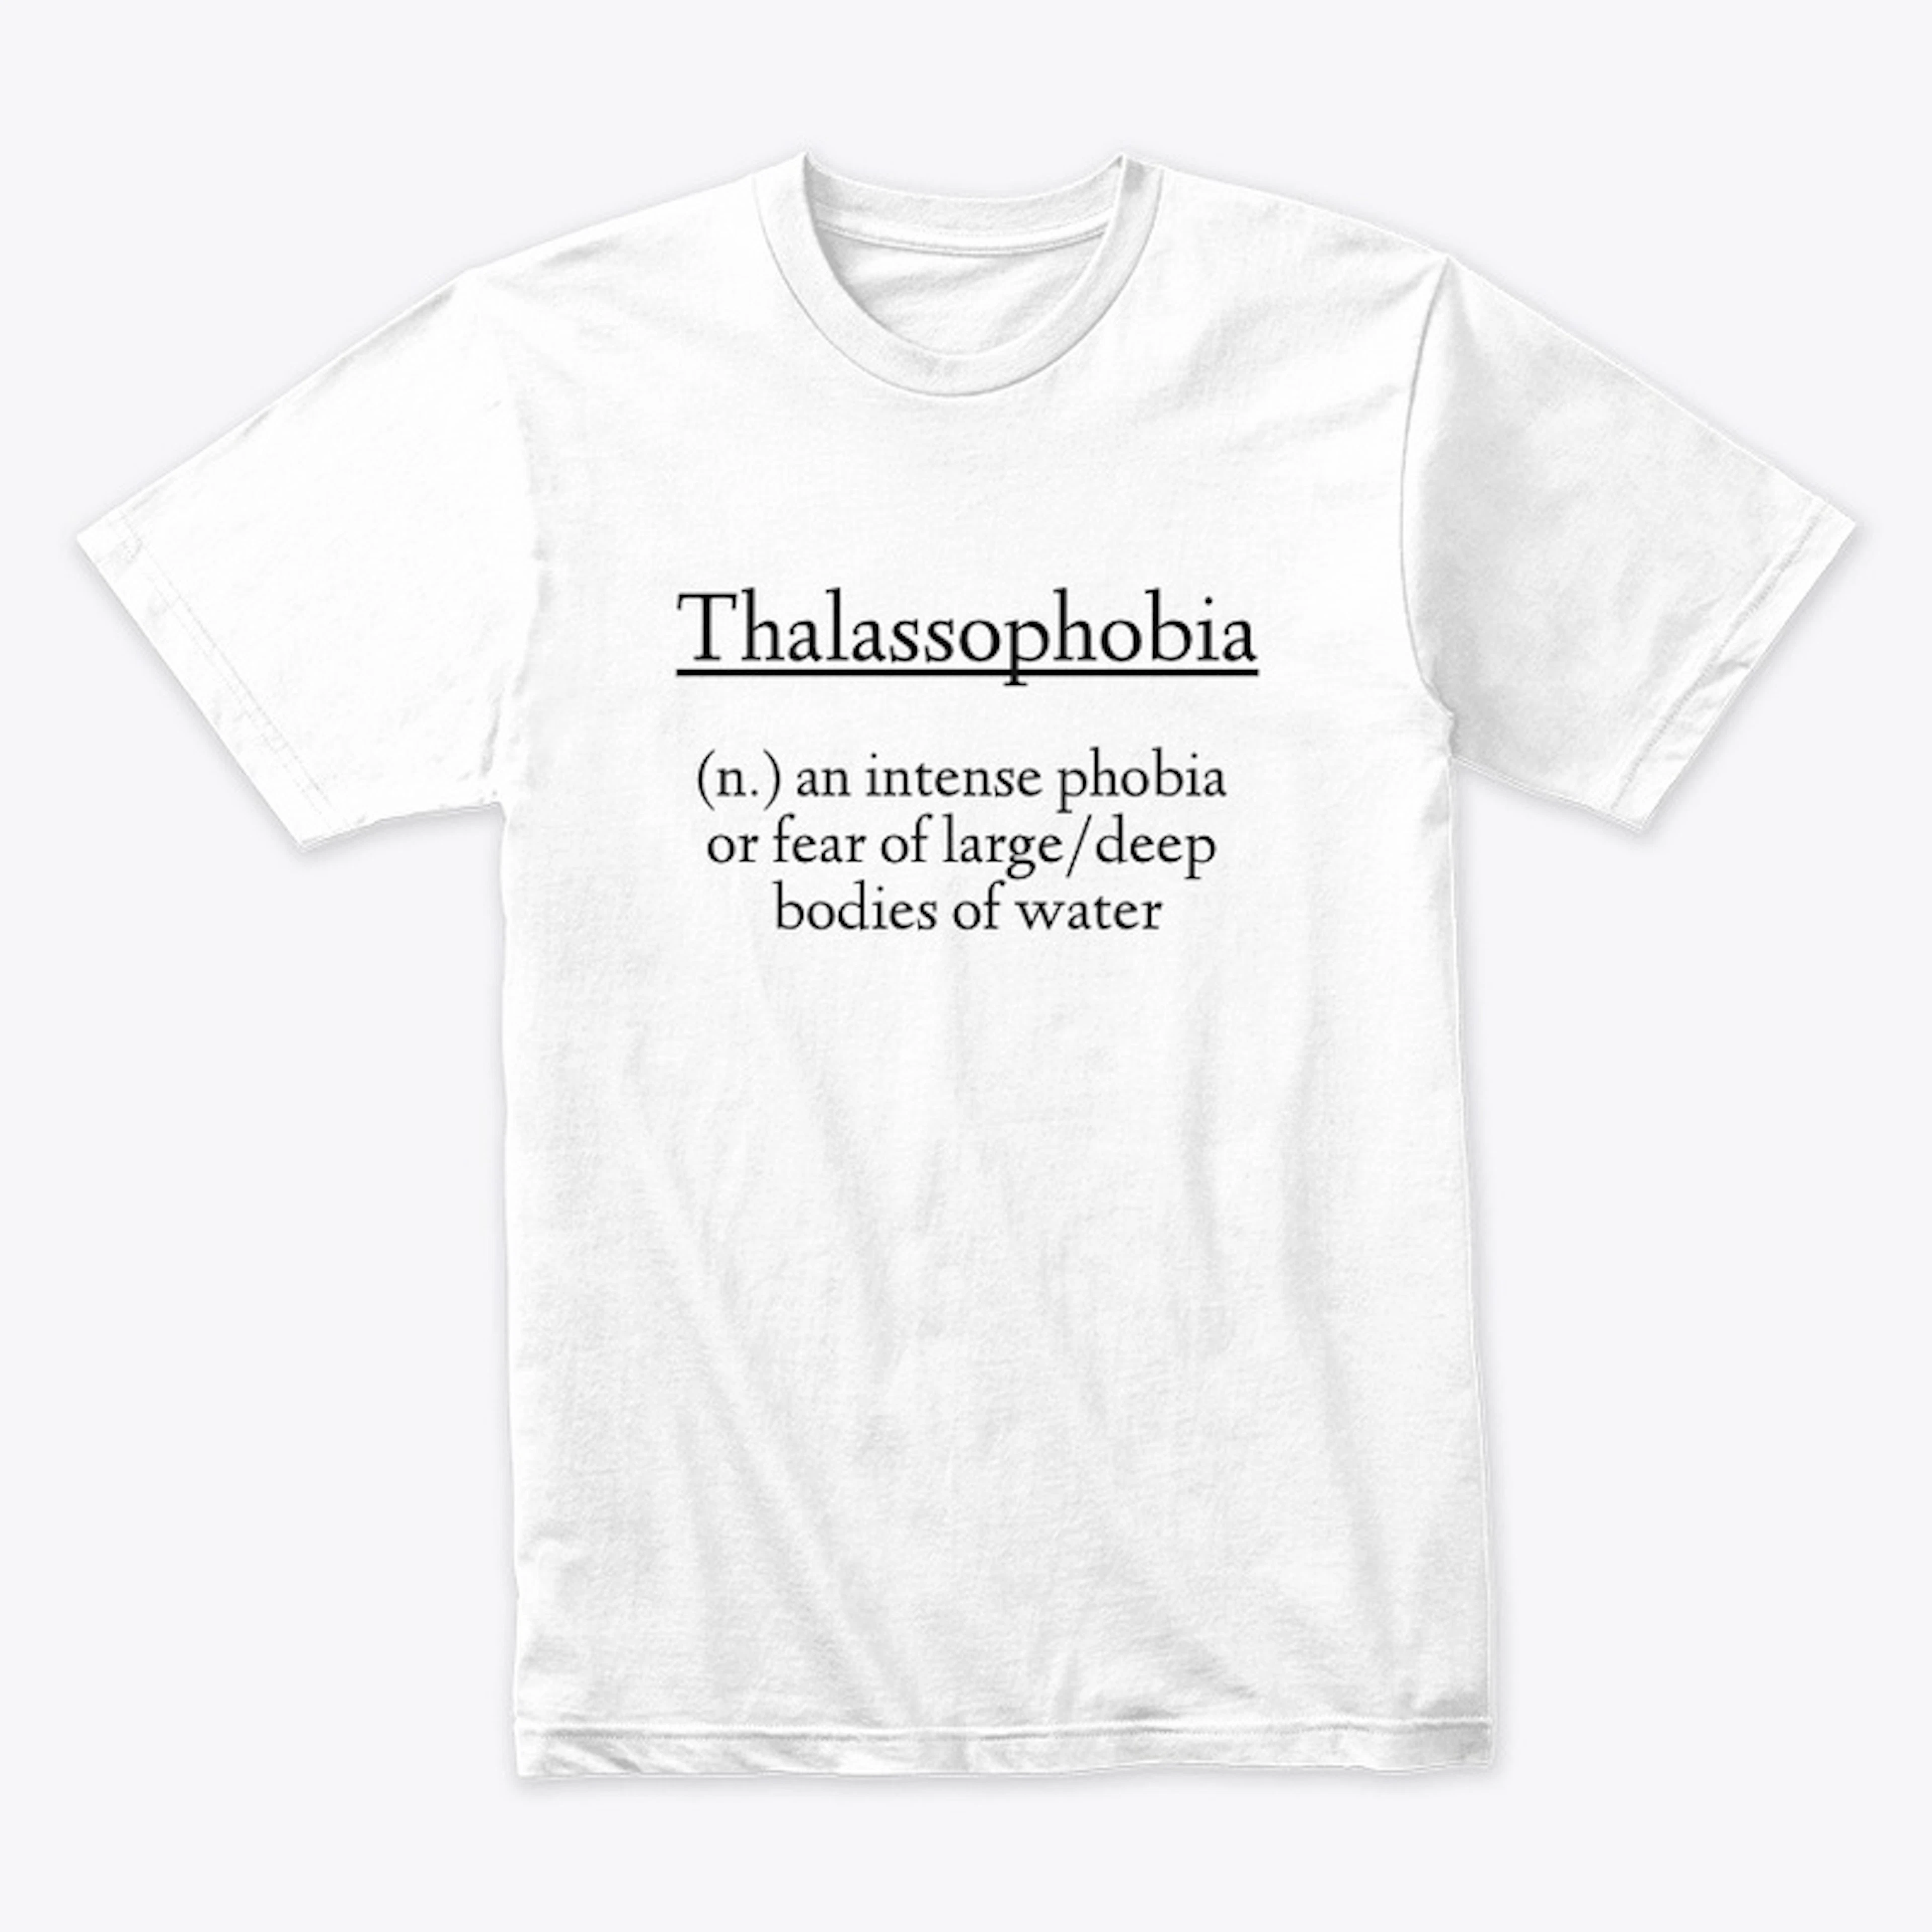 Thalassophobia T-Shirt (Phobia Series)